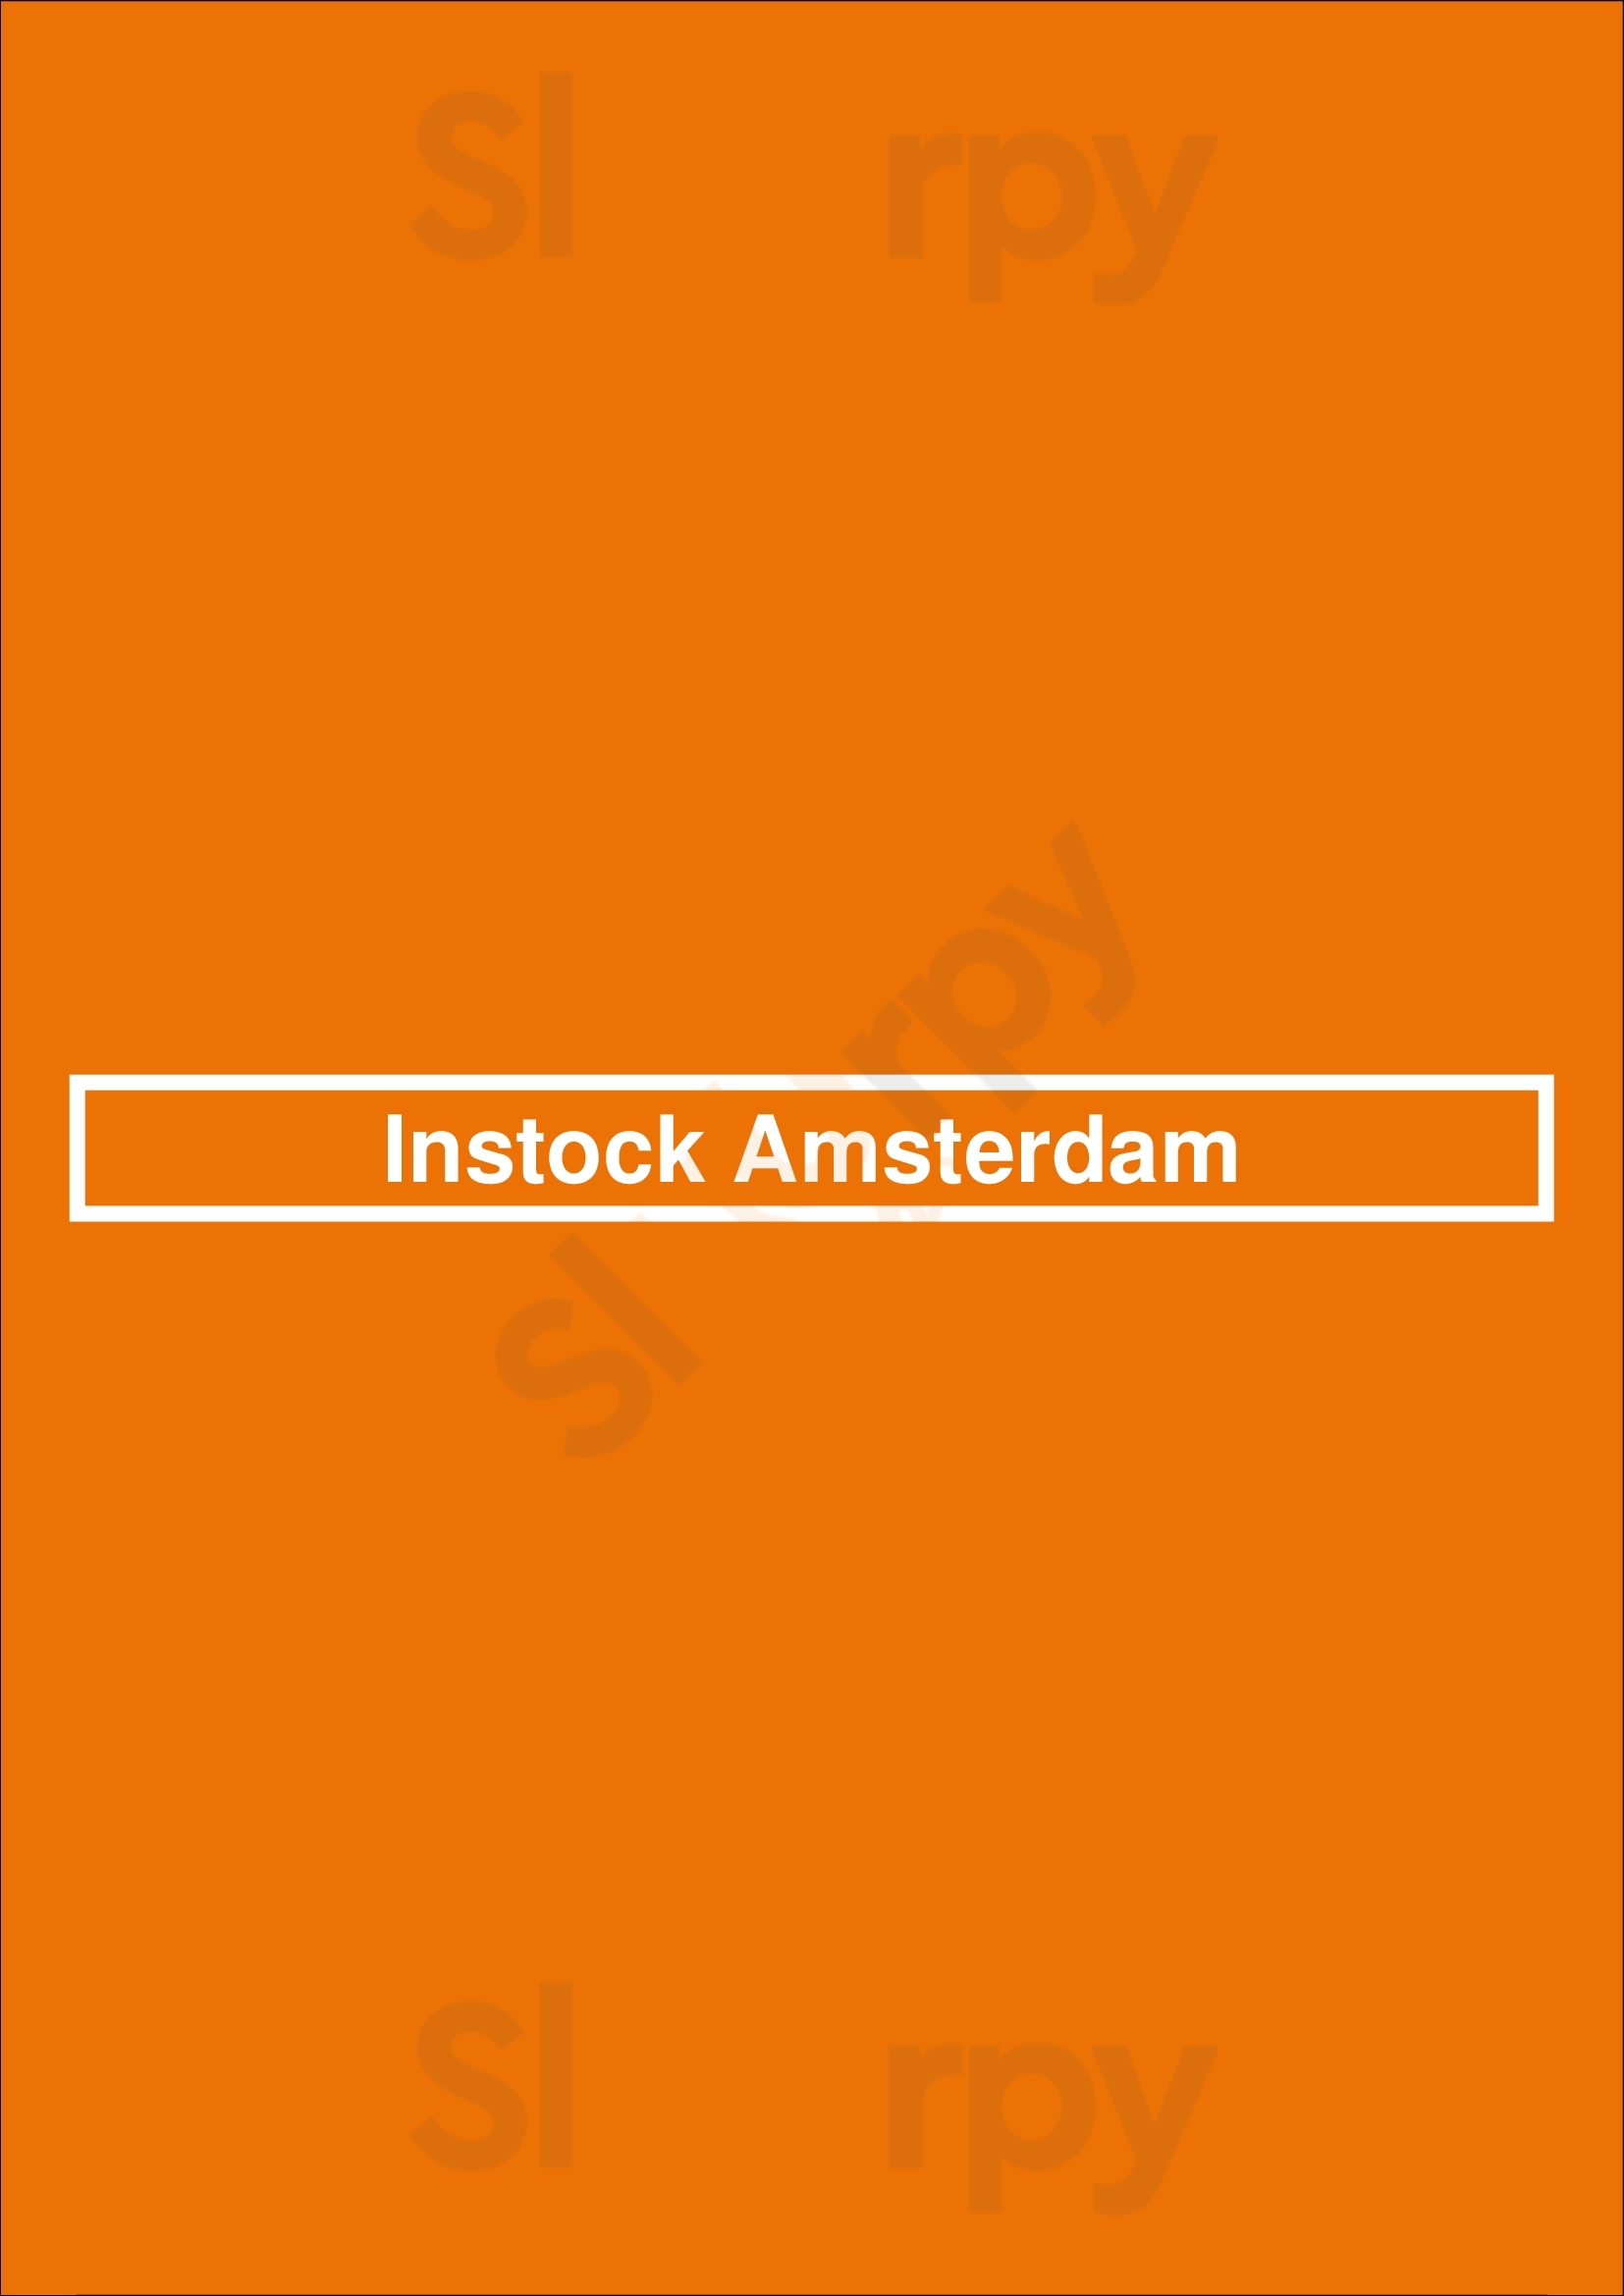 Instock Amsterdam Amsterdam Menu - 1